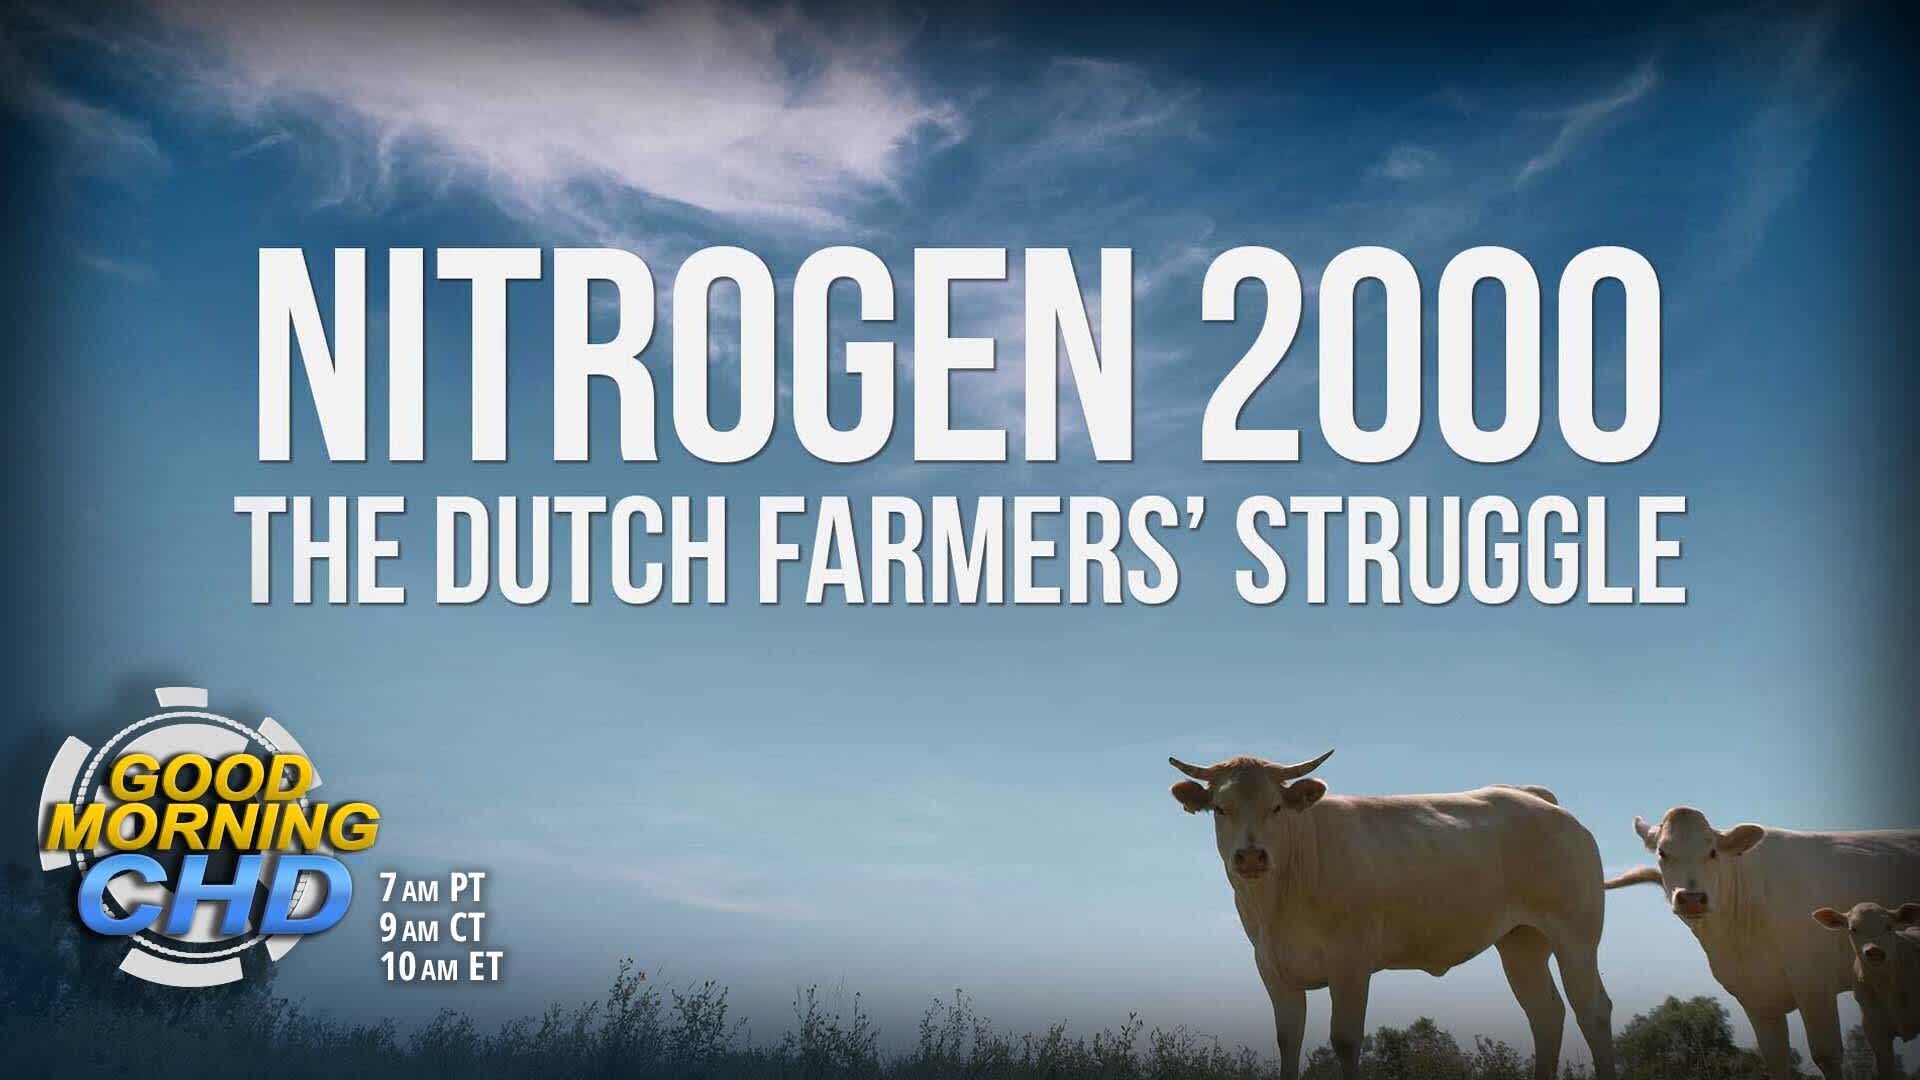 Nitrogen 2000 - The Dutch Farmers’ Struggle